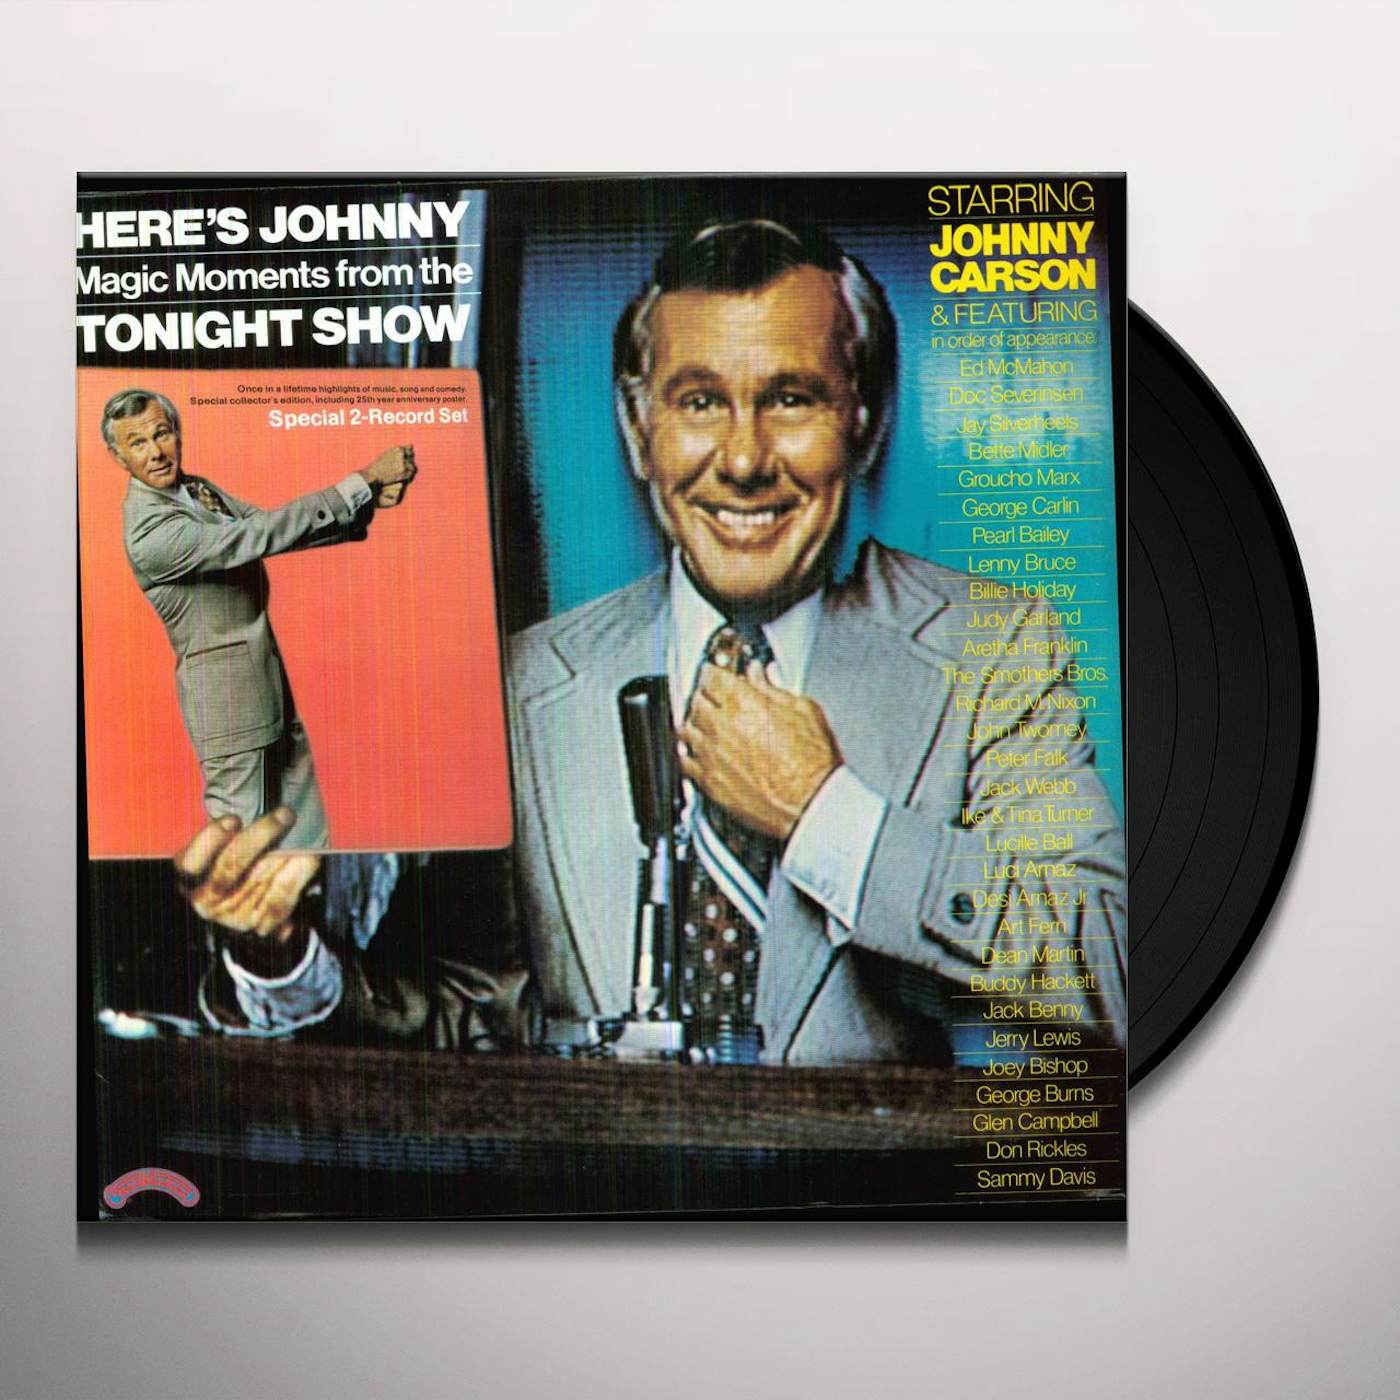 Here'S Johnny-Magic Moments Tonight Show / O.S.T. HERE'S JOHNNY-MAGIC MOMENTS TONIGHT SHOW / Original Soundtrack Vinyl Record